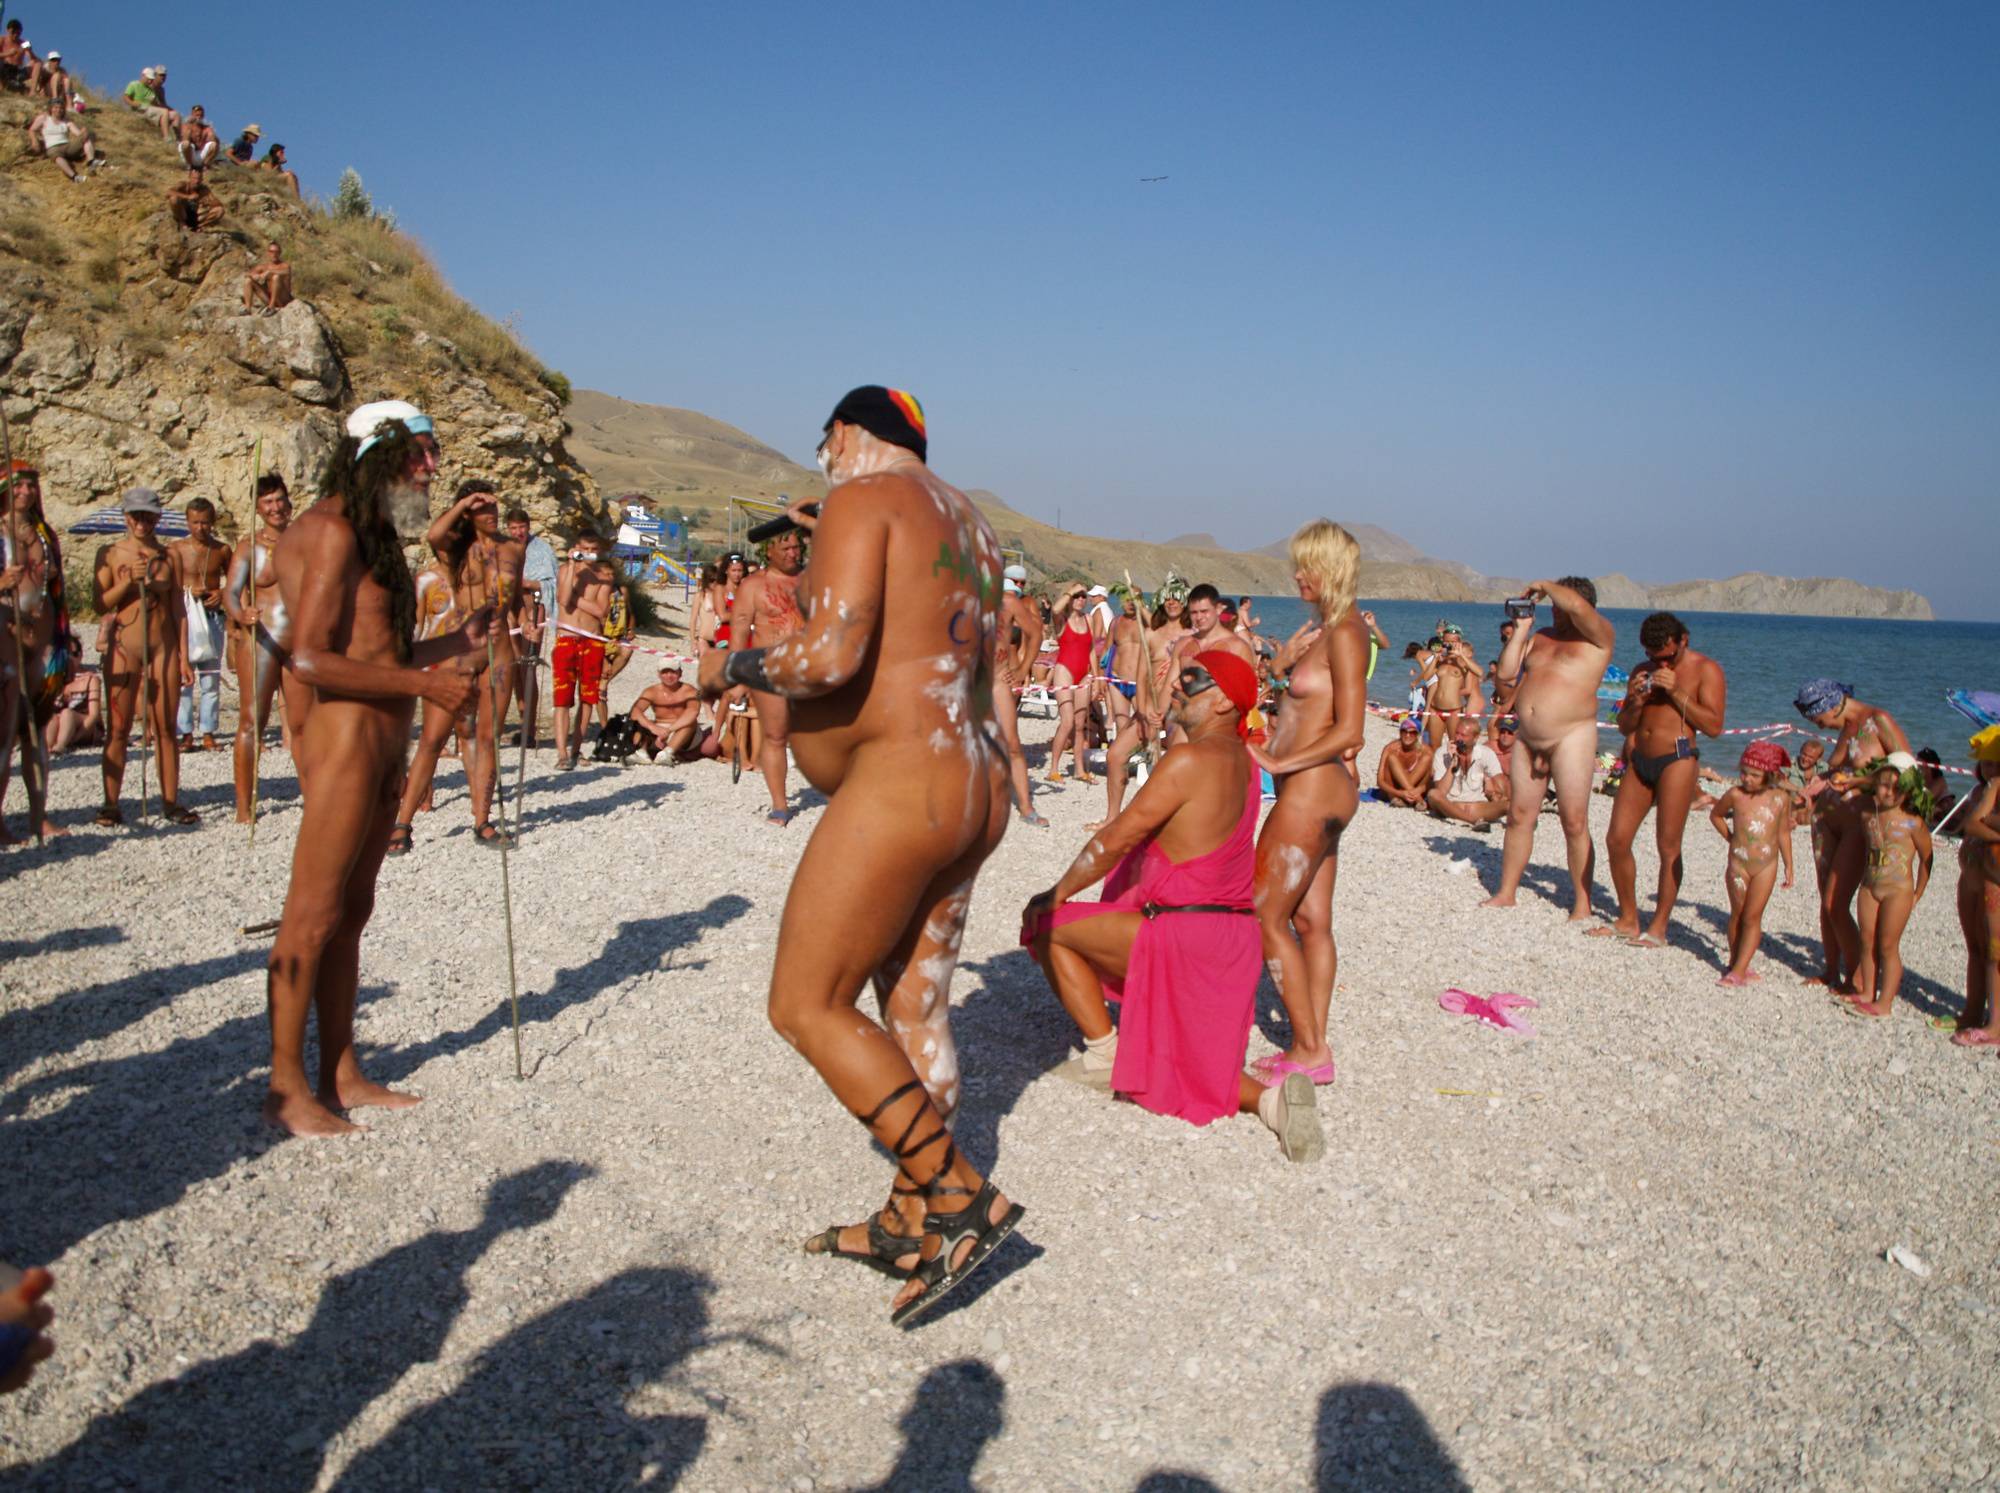 Nudist Pics Nudist Event Introductions - 1